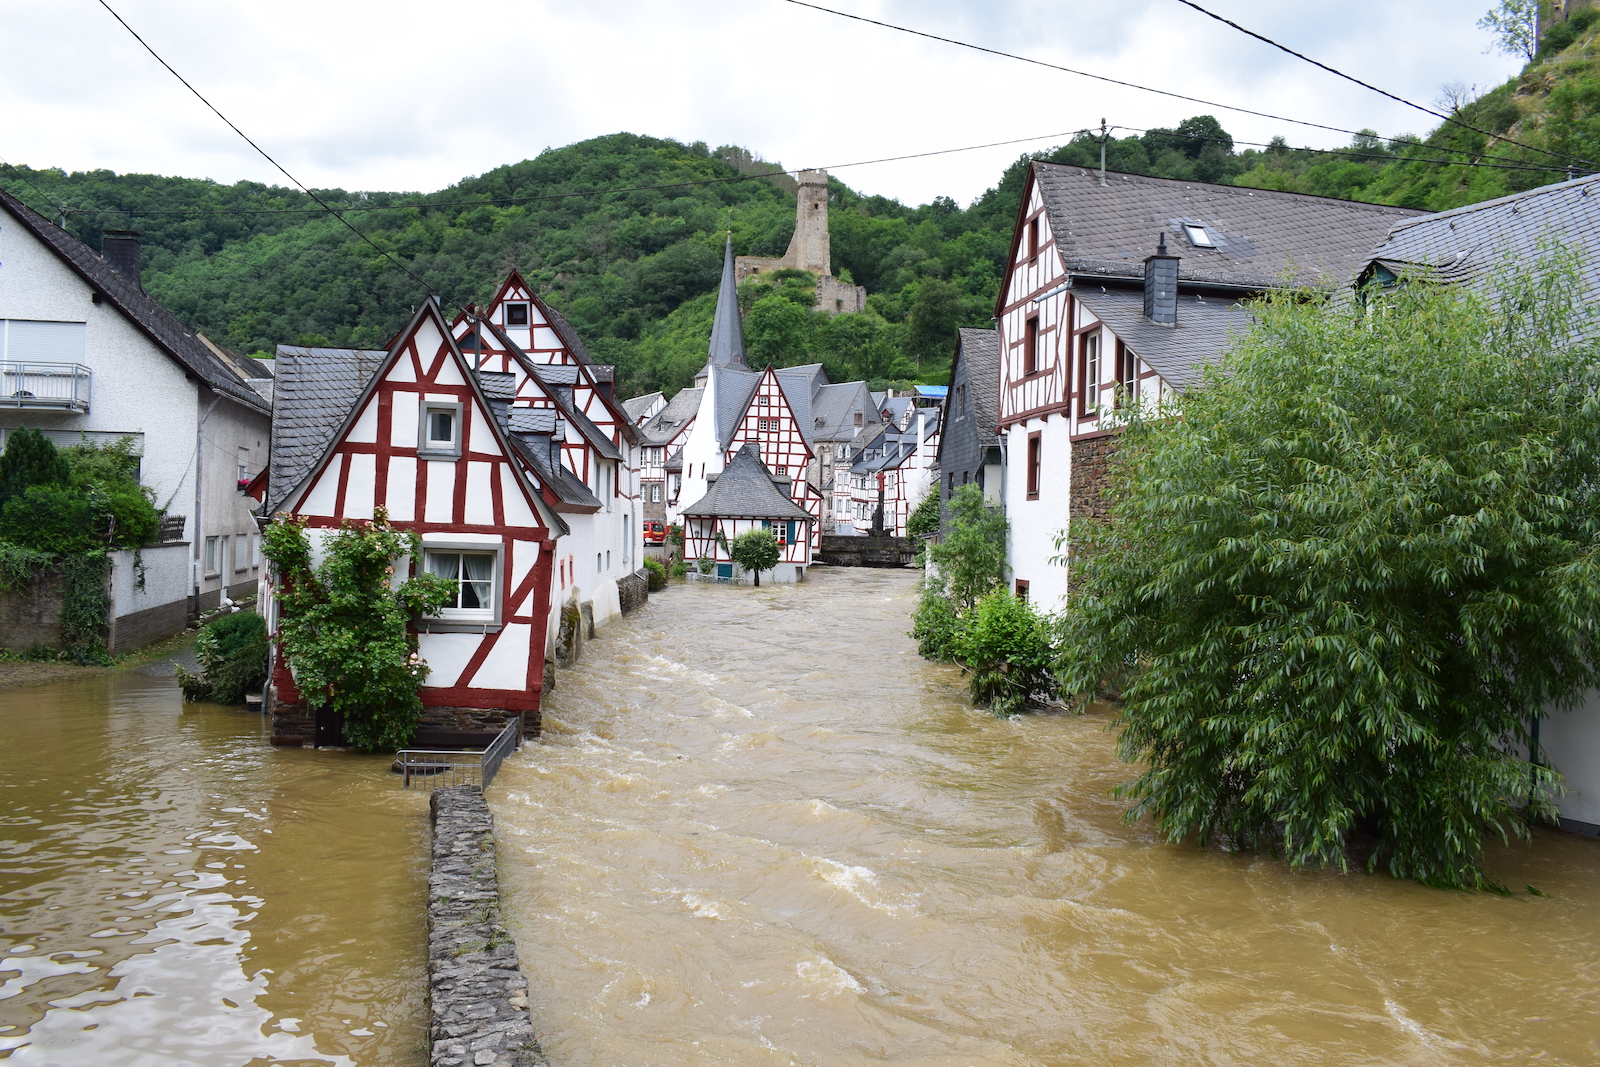 Eifel, Elz valley, flood disaster, July 15th 2021.